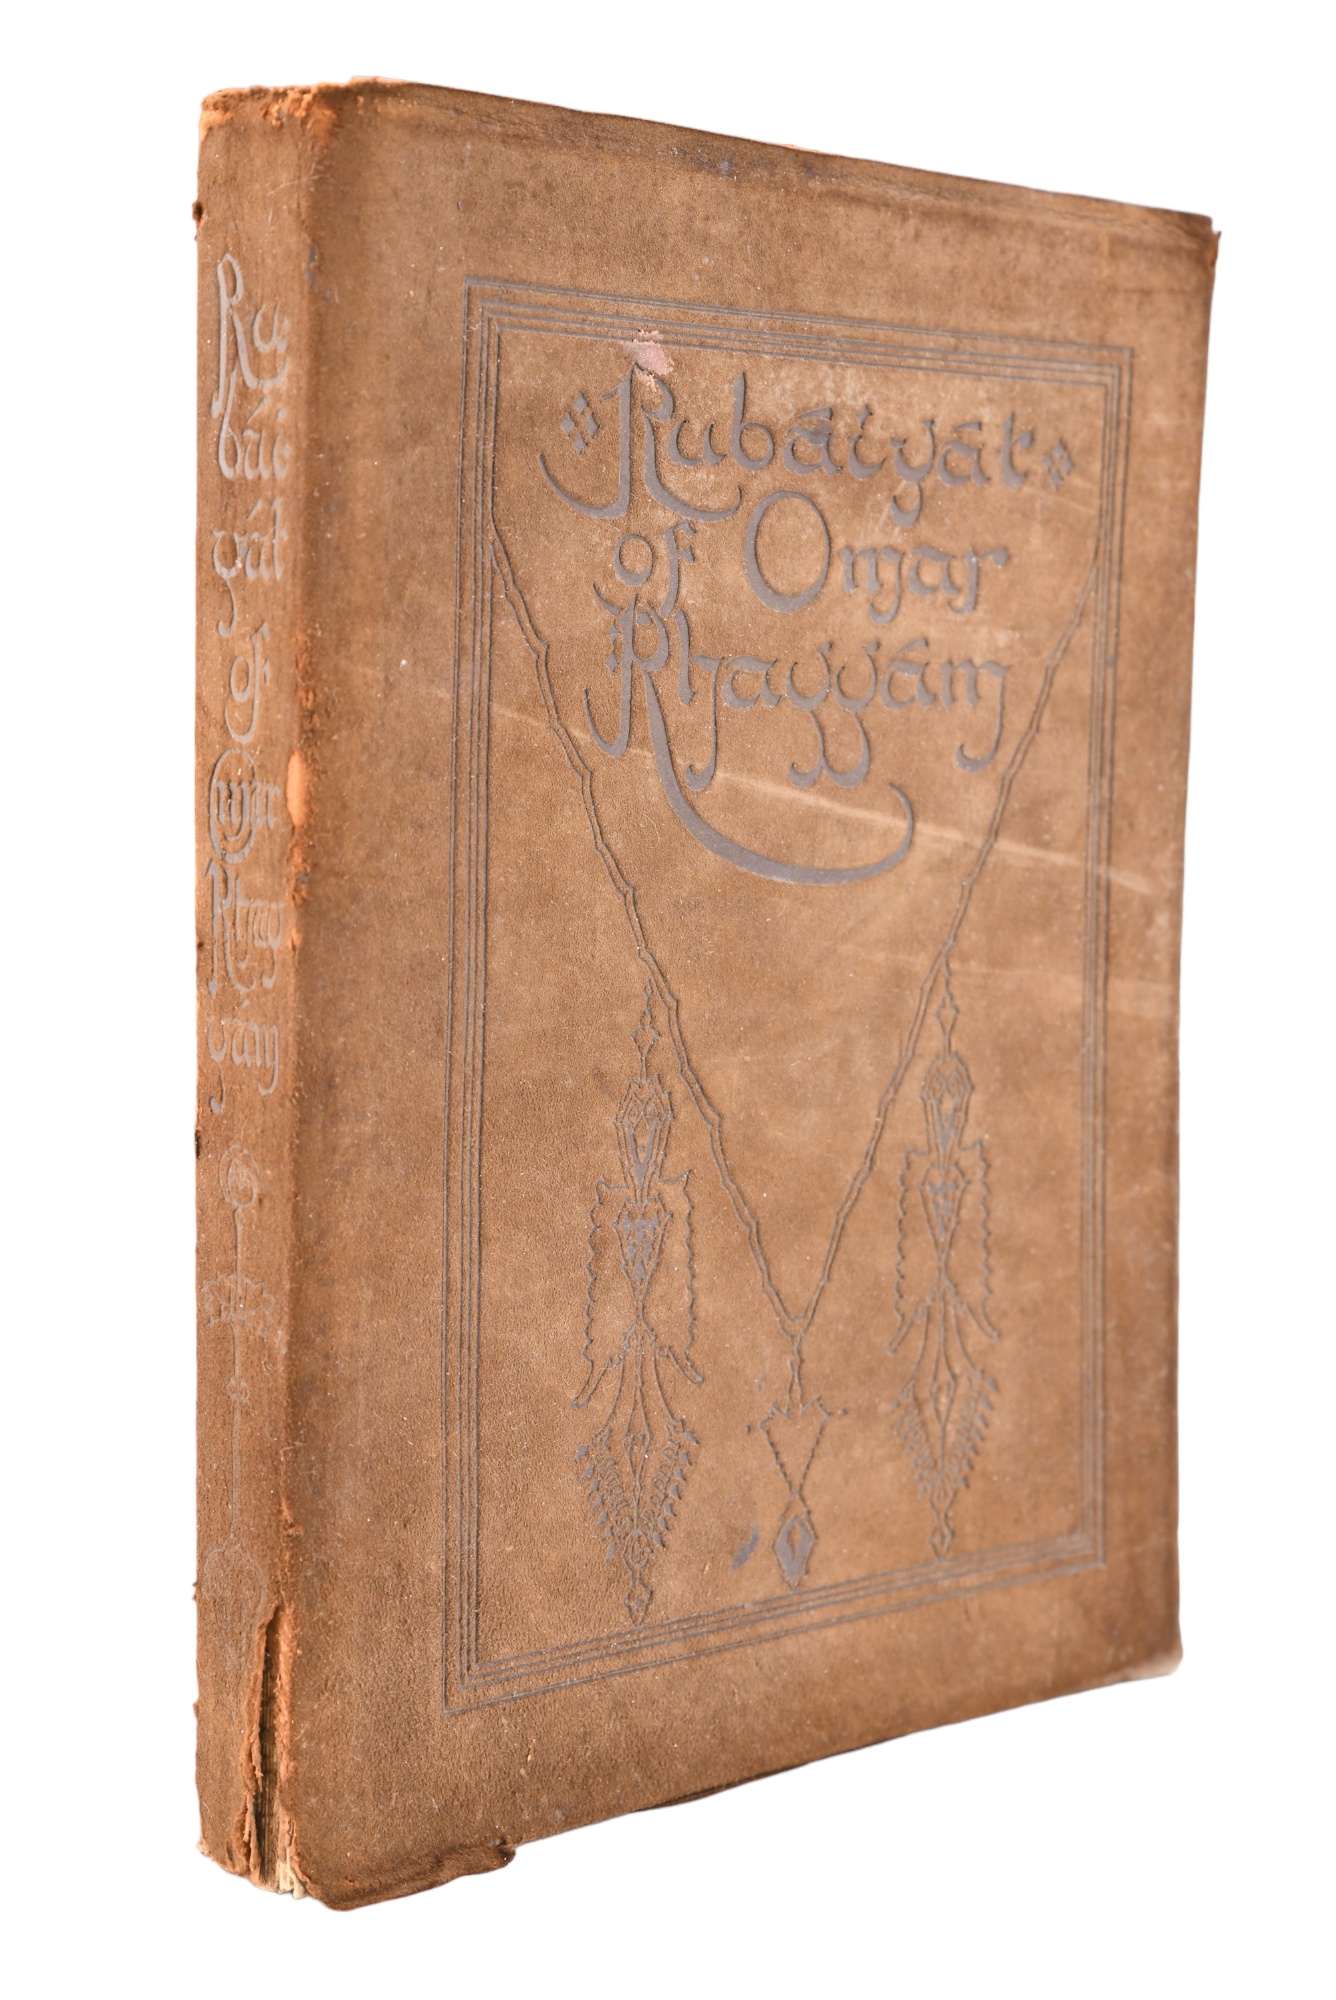 Rubaiyat of Omar Khayyam, illustrated by Willy Pogany, George G Harrap & Co, London, circa 1910,